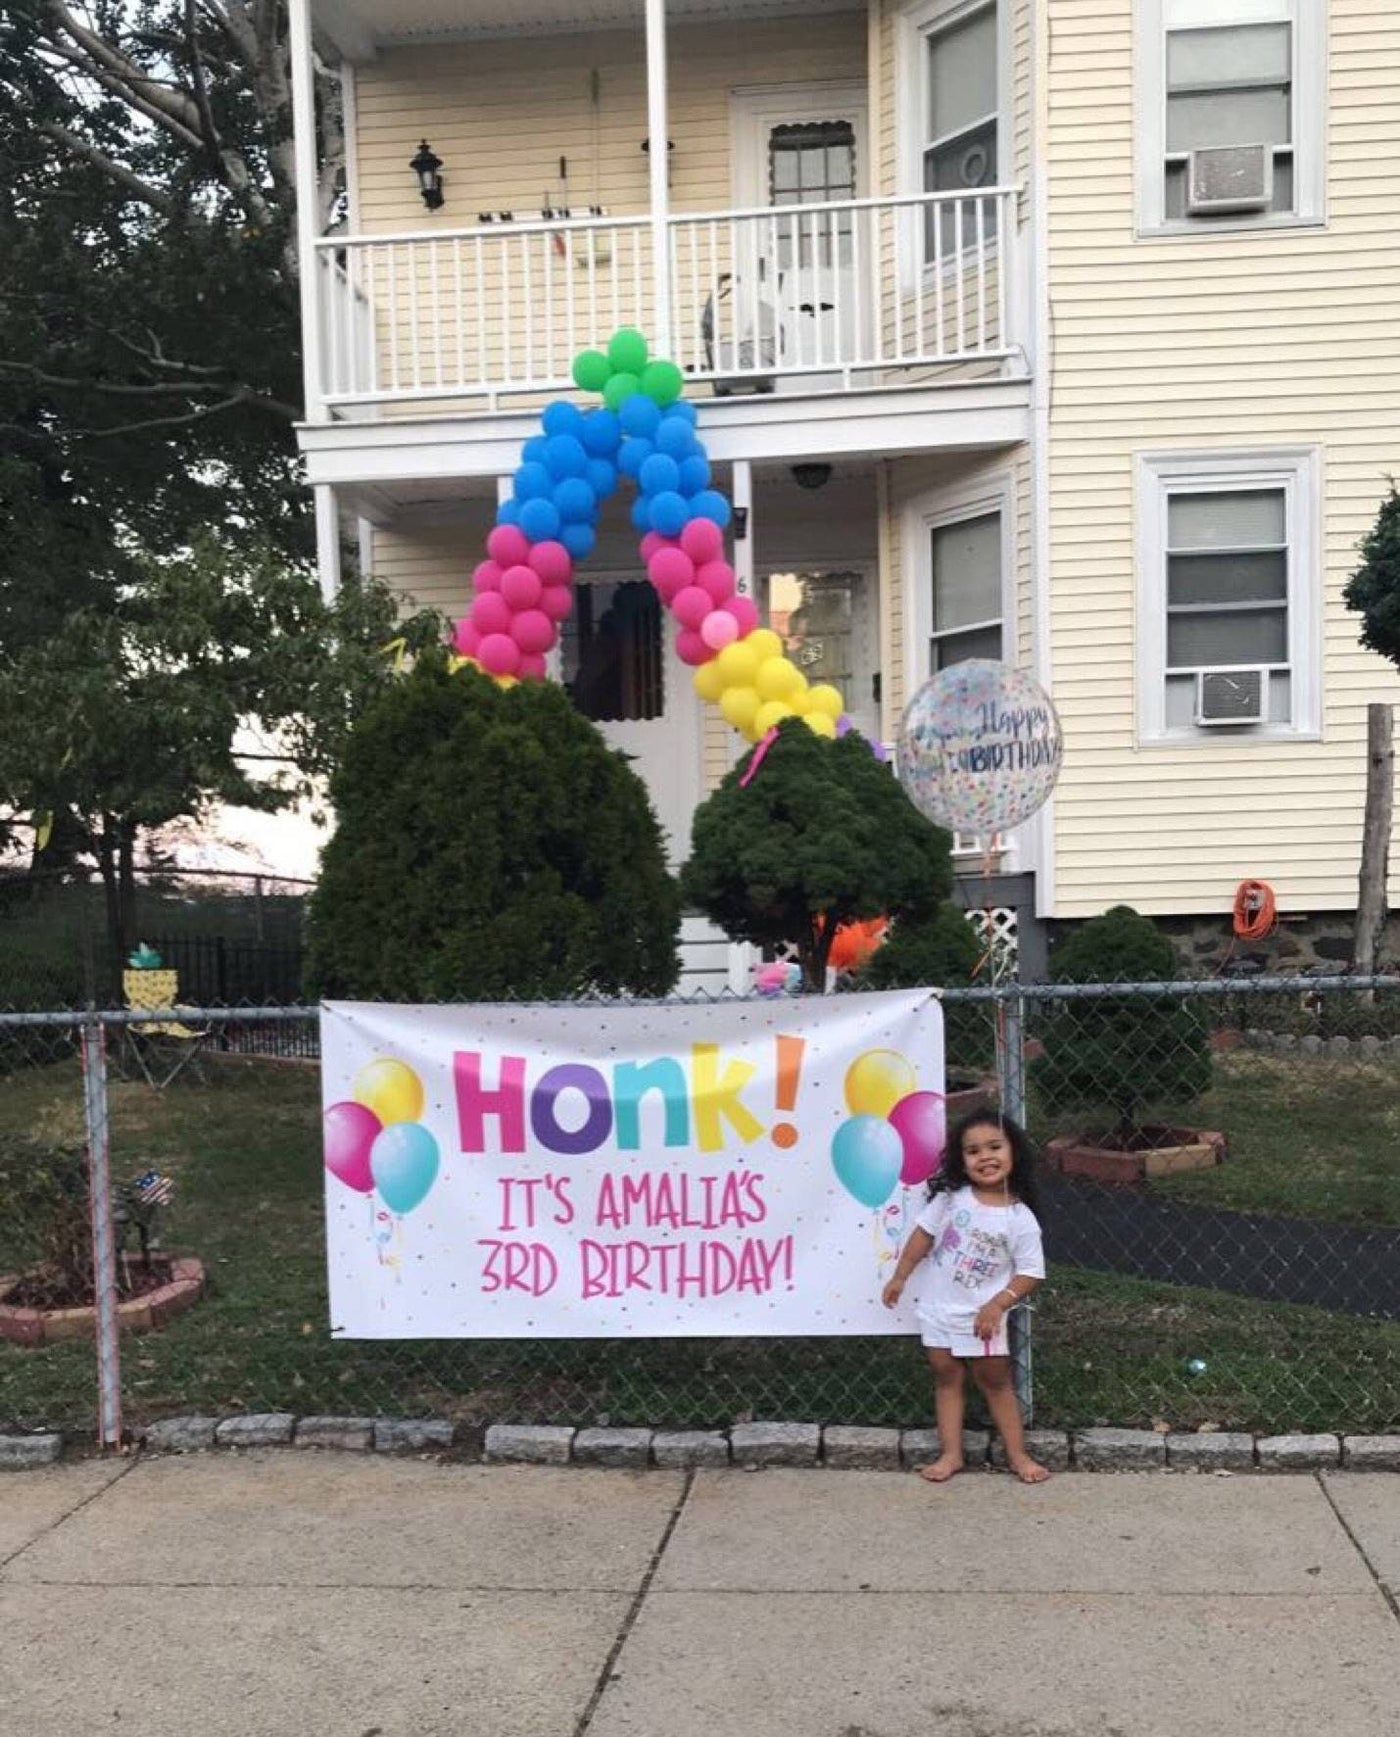 Honk Birthday Banner, Honk birthday sign, yard banner, happy birthday banner for yard, birthday yard decorations, girl birthday banner, pink